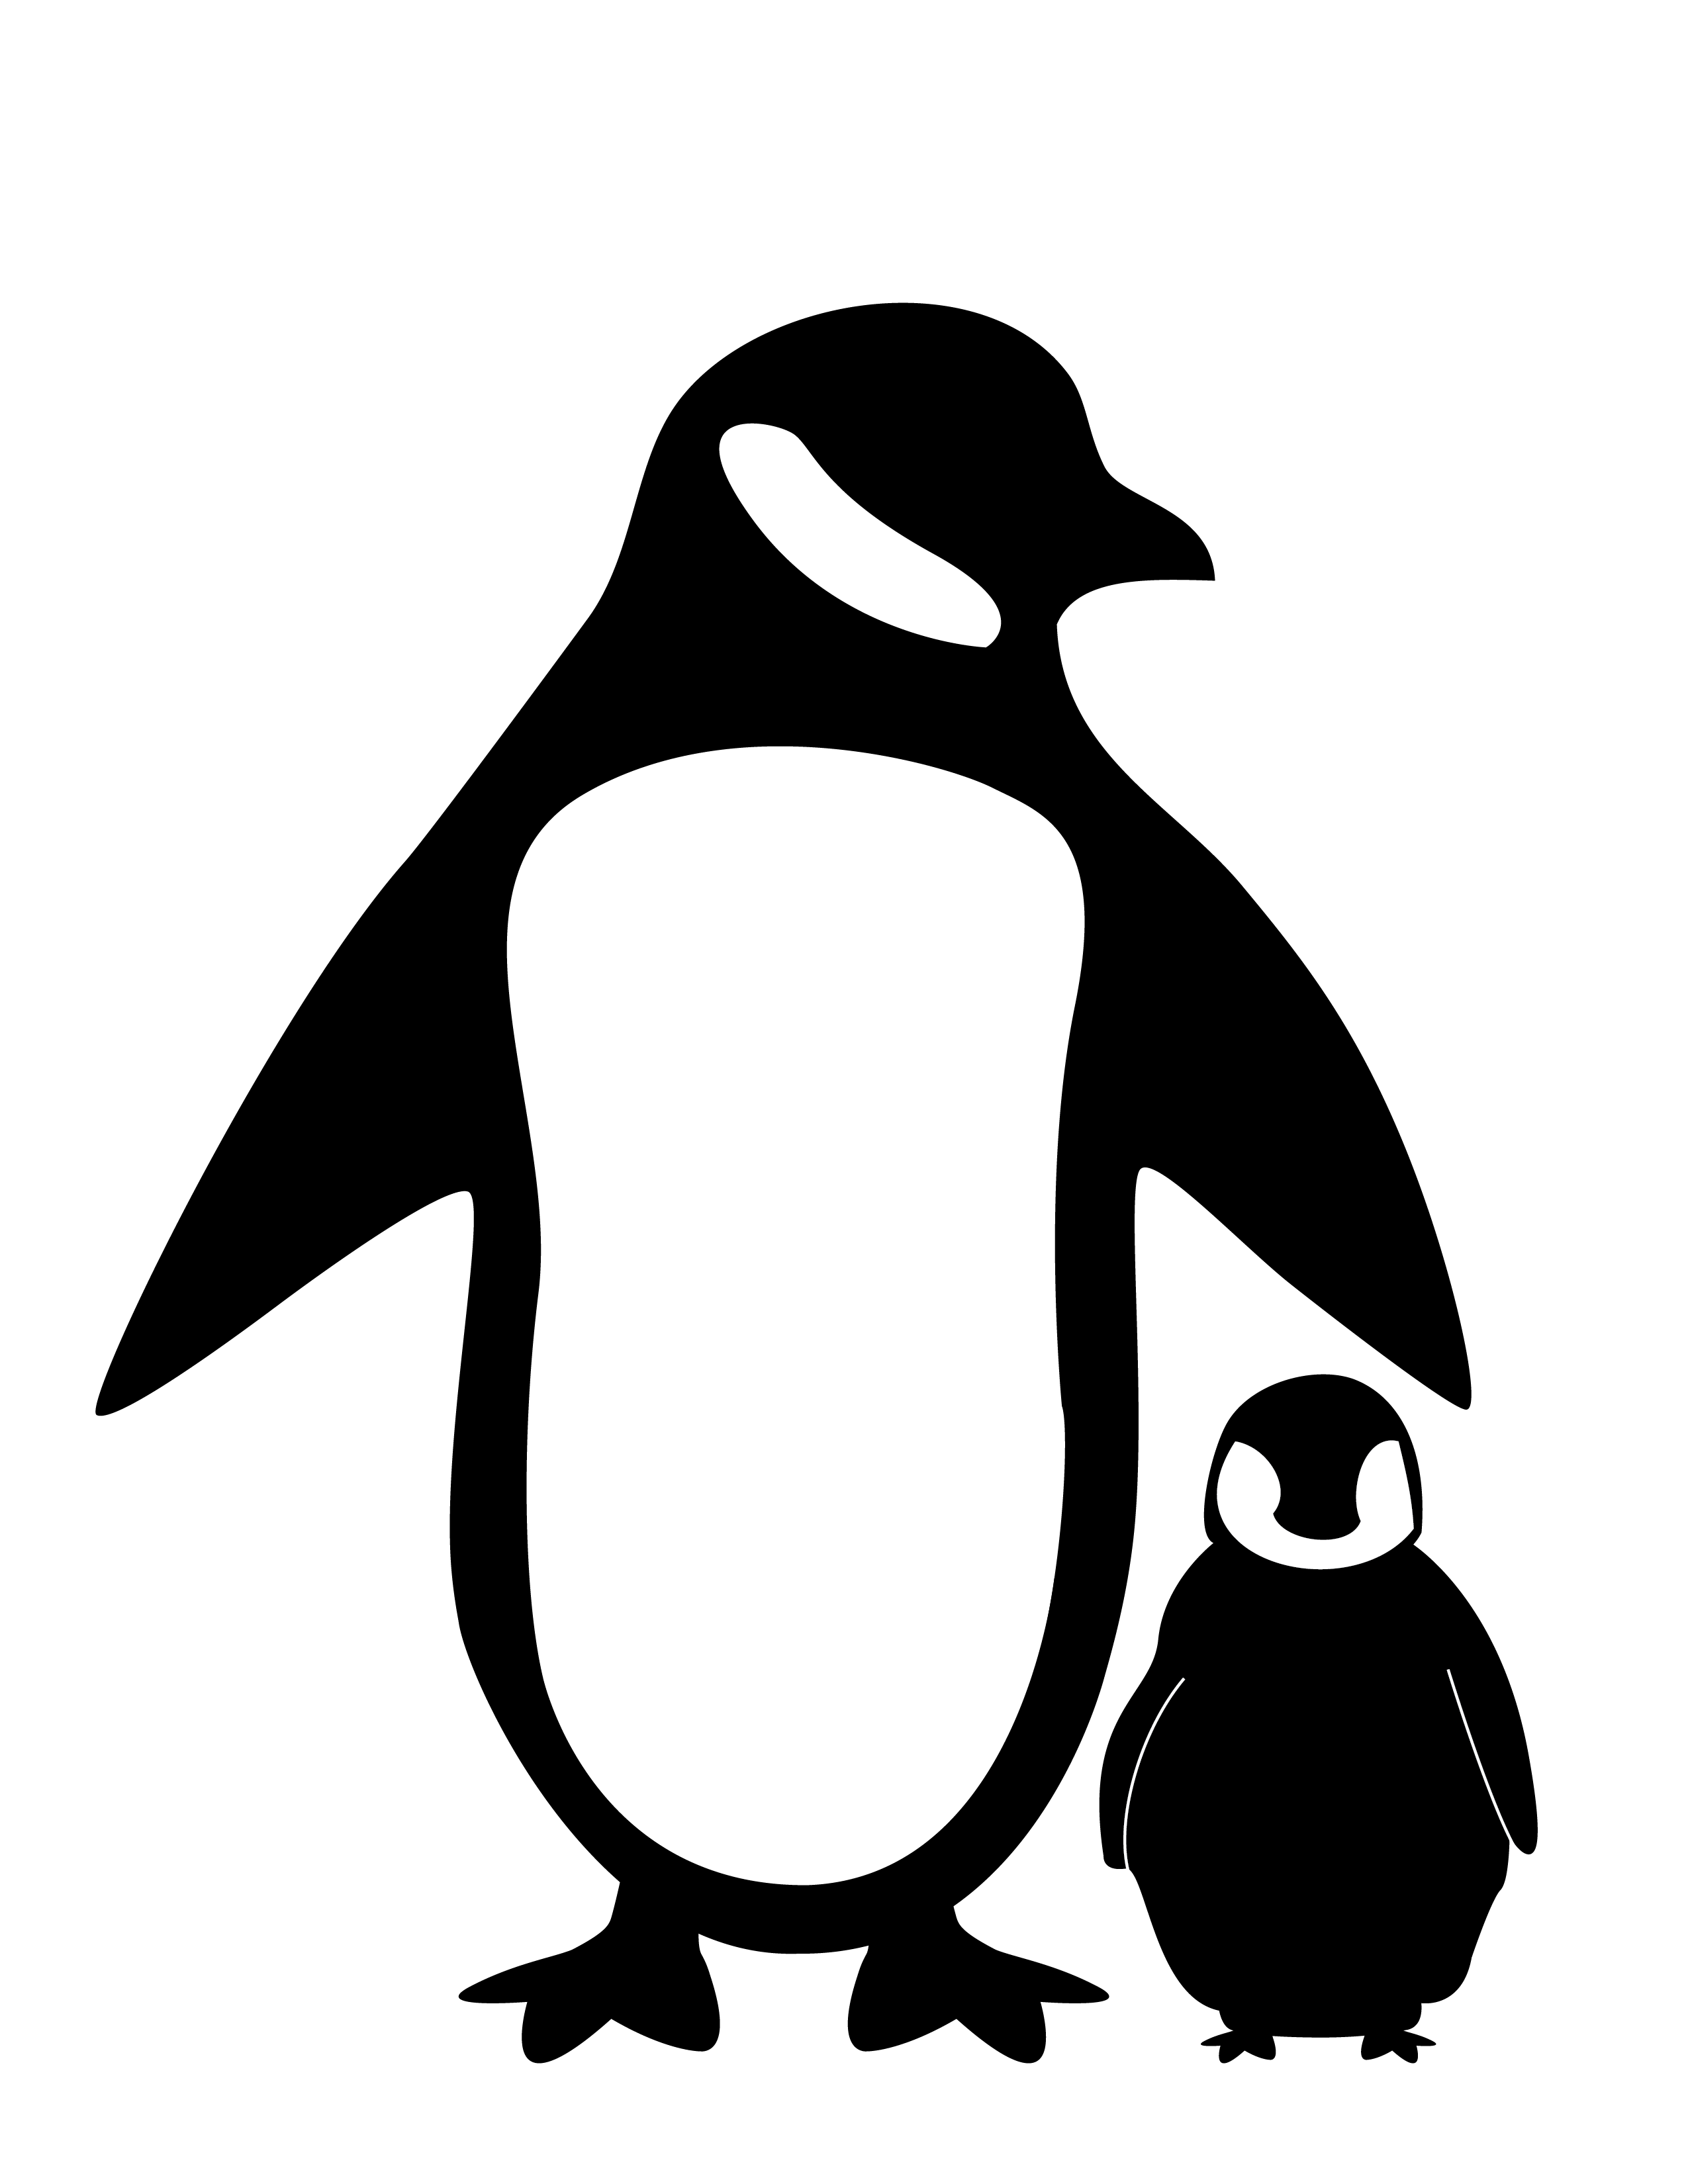 Penguin silhouette fc09.